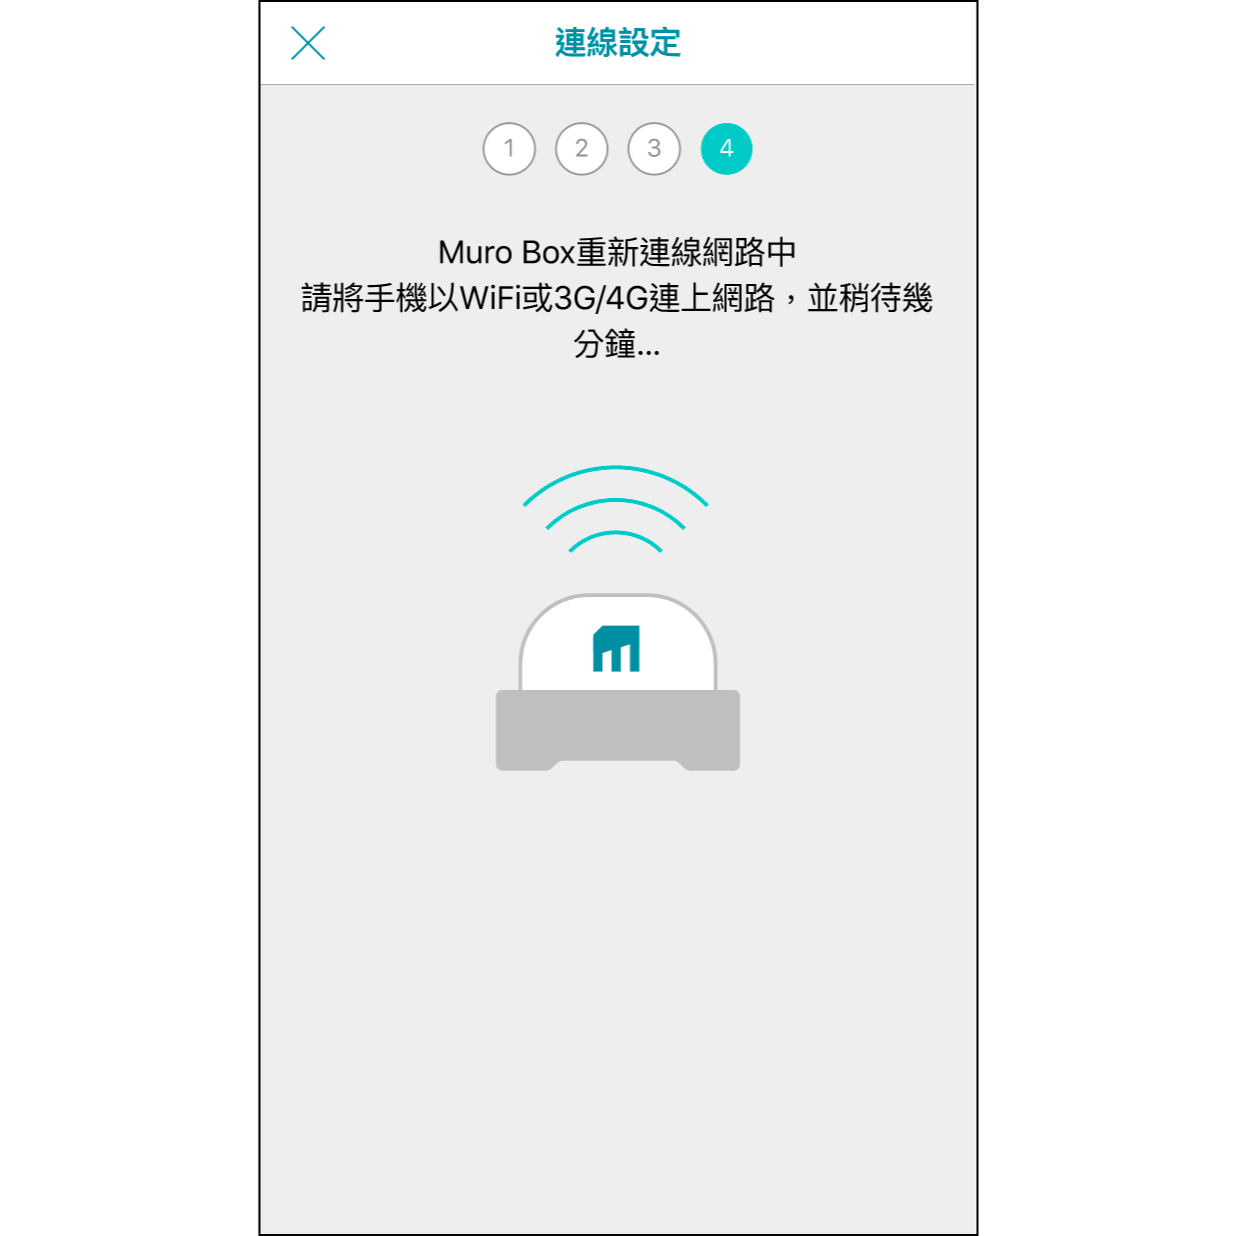 11. Muro Box 熱點手機連線，回到 Muro Box app 畫面，稍待約 30 秒左右，等待 Muro Box 連線手機連線。